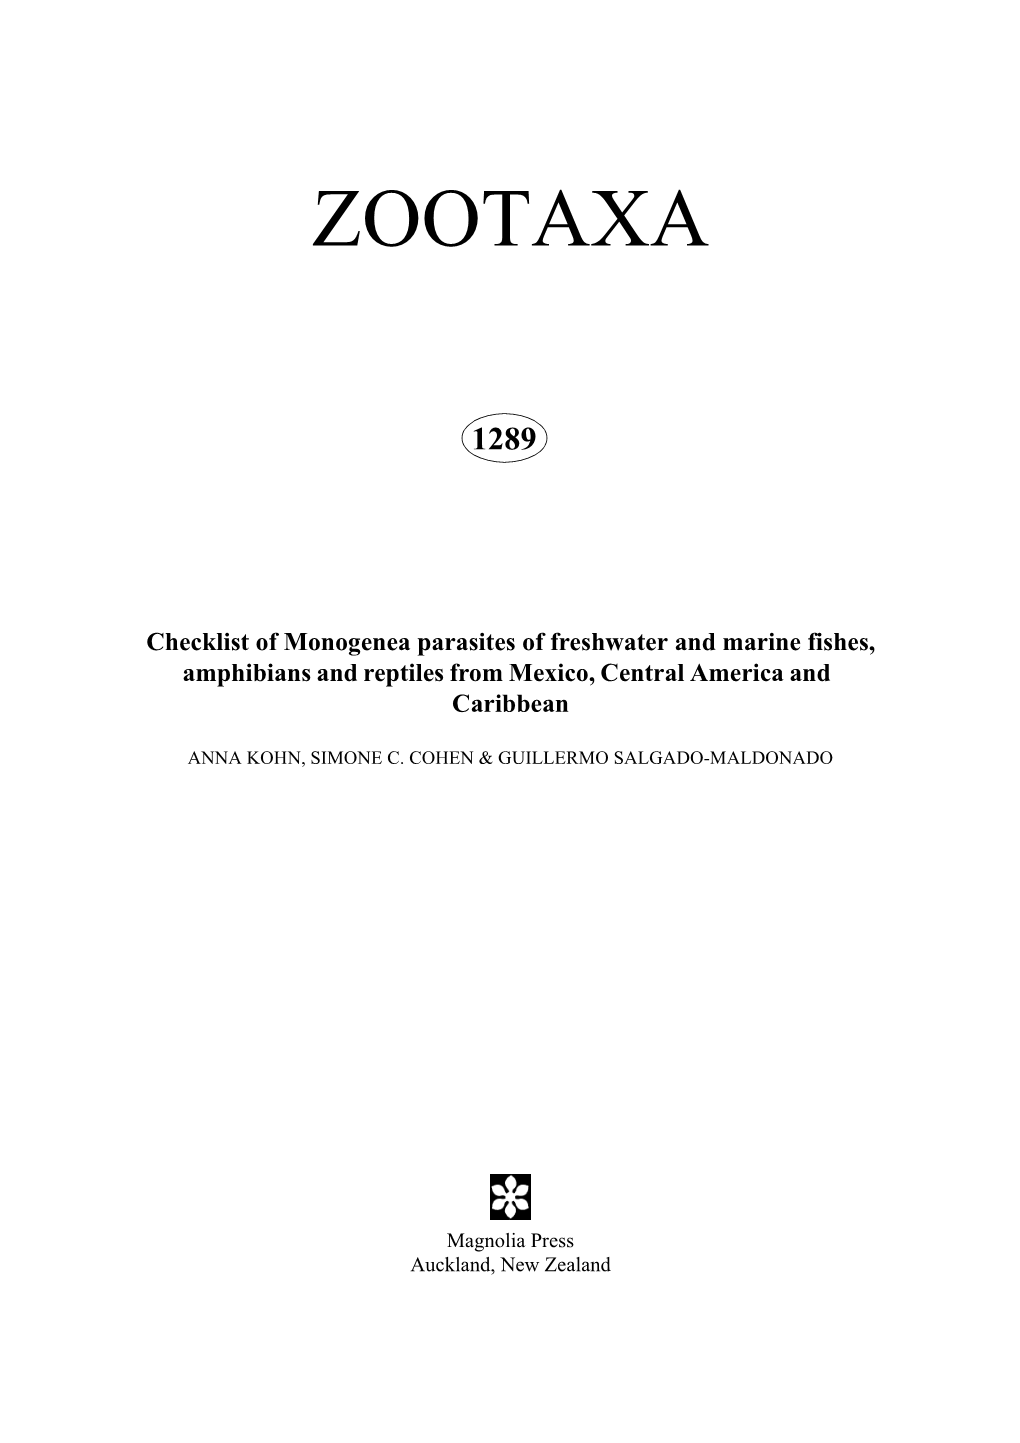 Zootaxa: Checklist of Monogenea Parasites Of